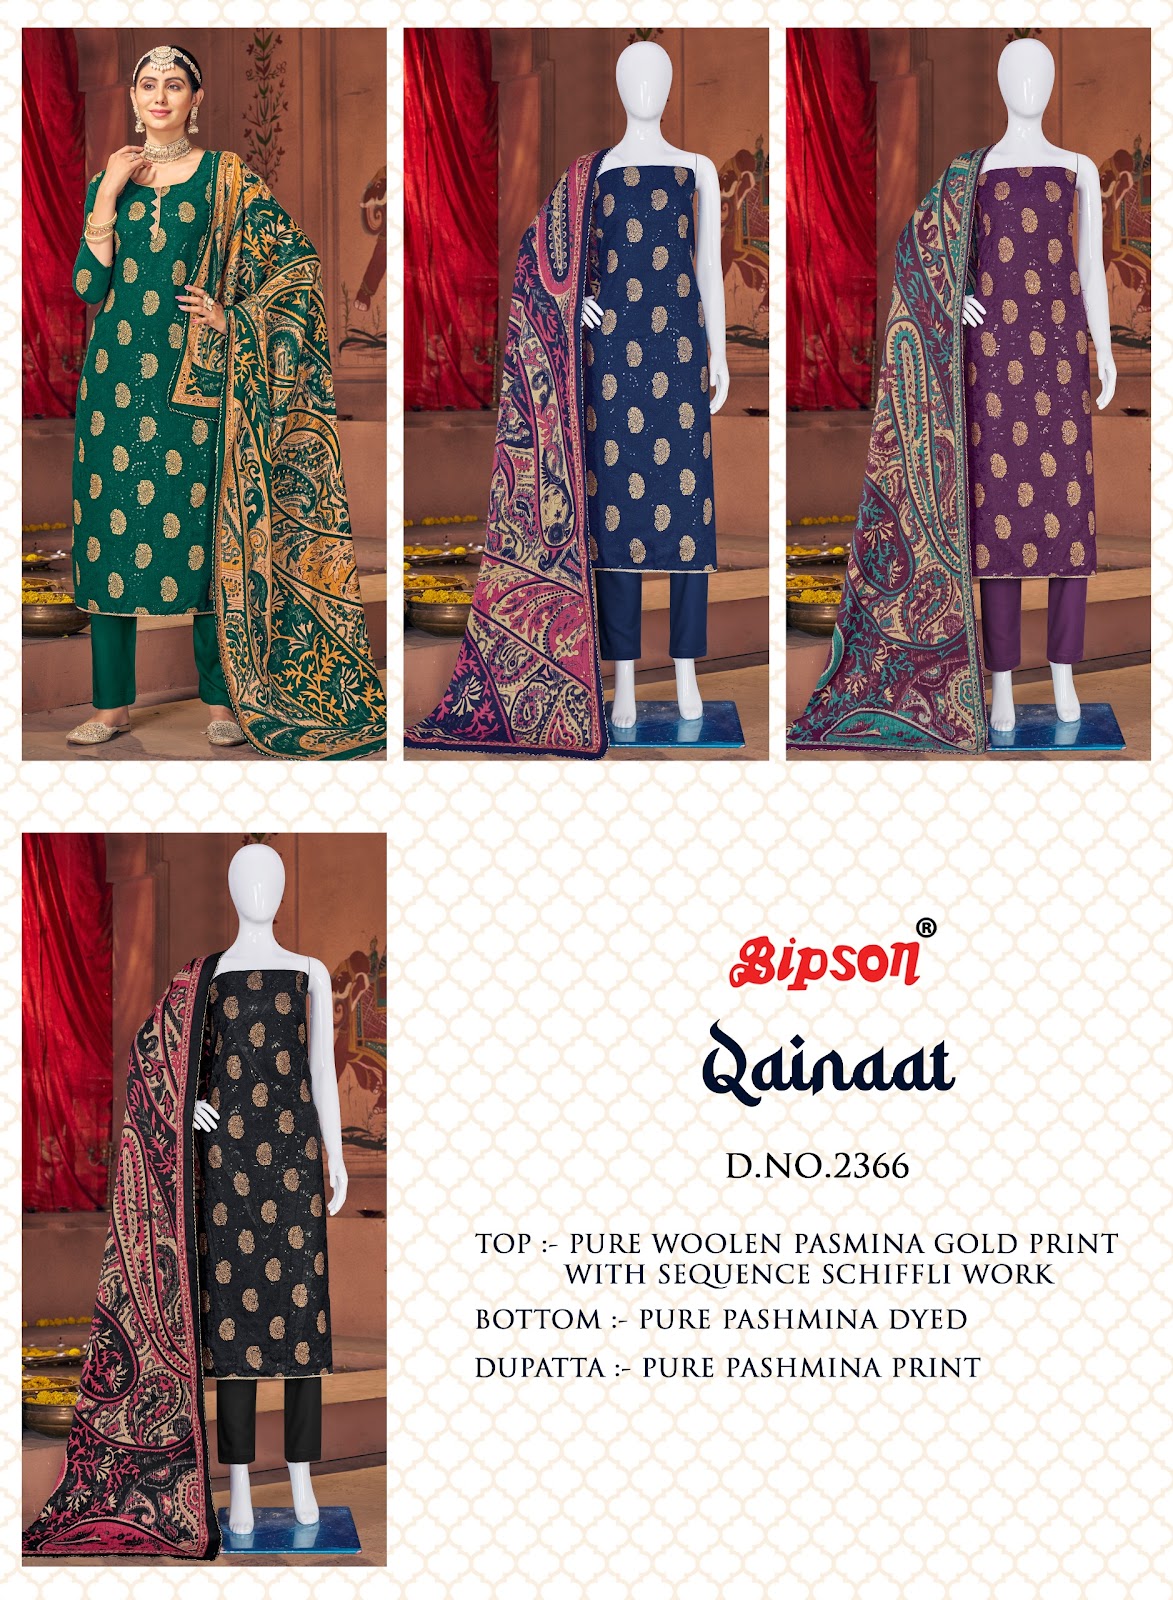 Qainaat 2366 Bipson Prints Pashmina Suits